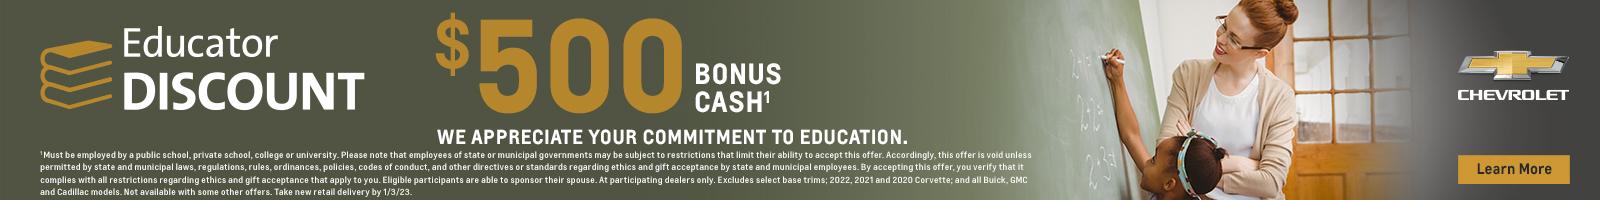 Educator Discount. $500 Bonus Cash. We appreciate your commitment to education.